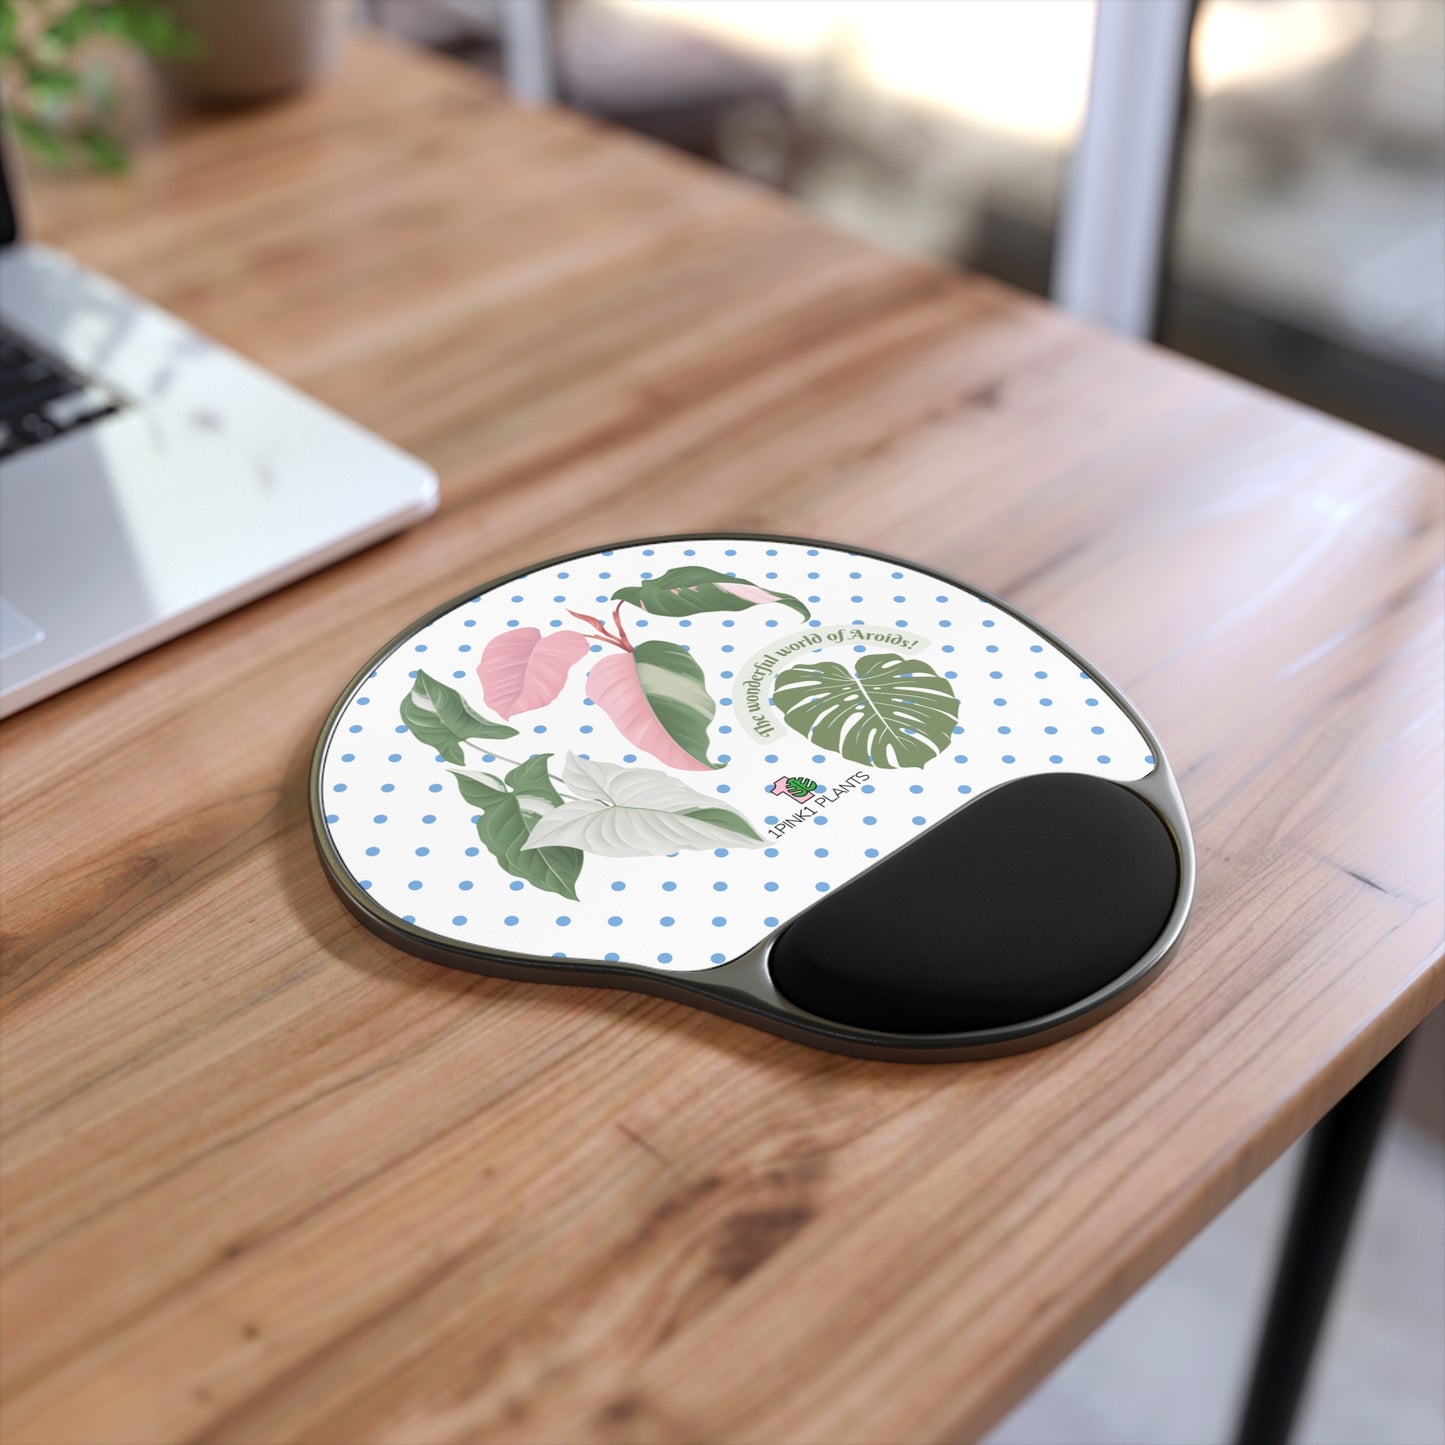 Ergonomic Memory Foam Mouse Pad, The Wonderful World of Aroids Print Mouse Pad